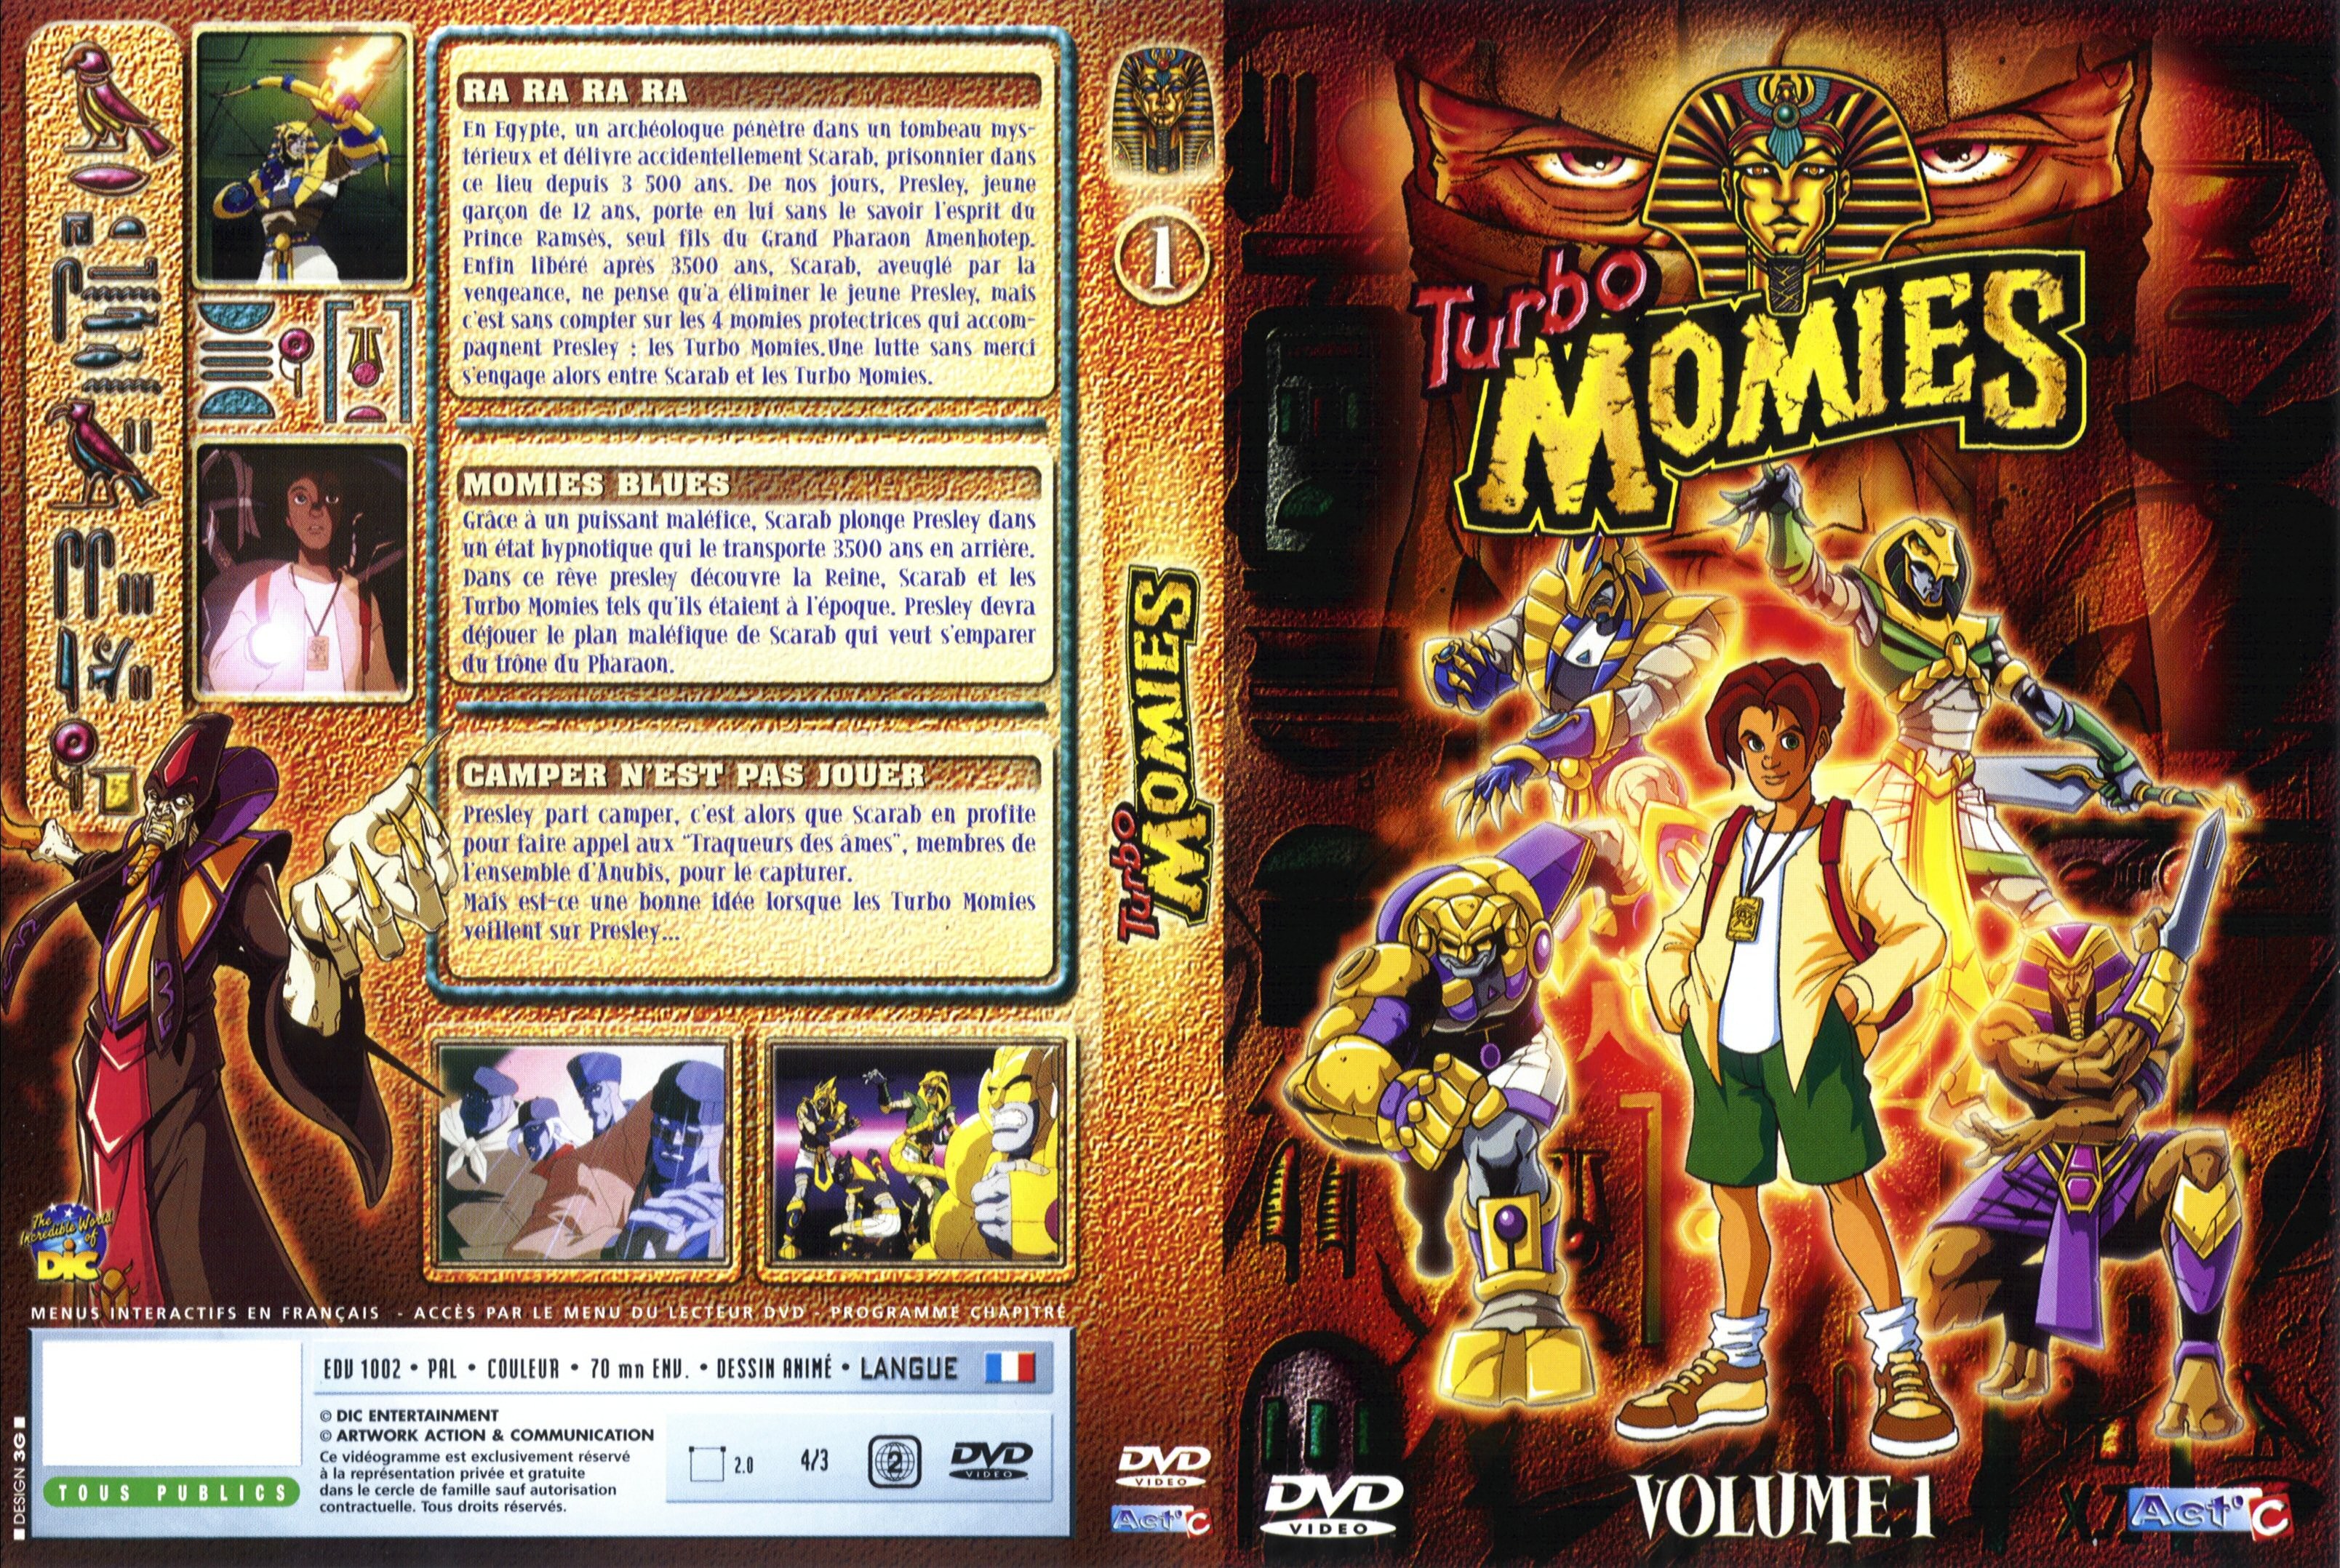 Jaquette DVD Turbo Momies vol 1